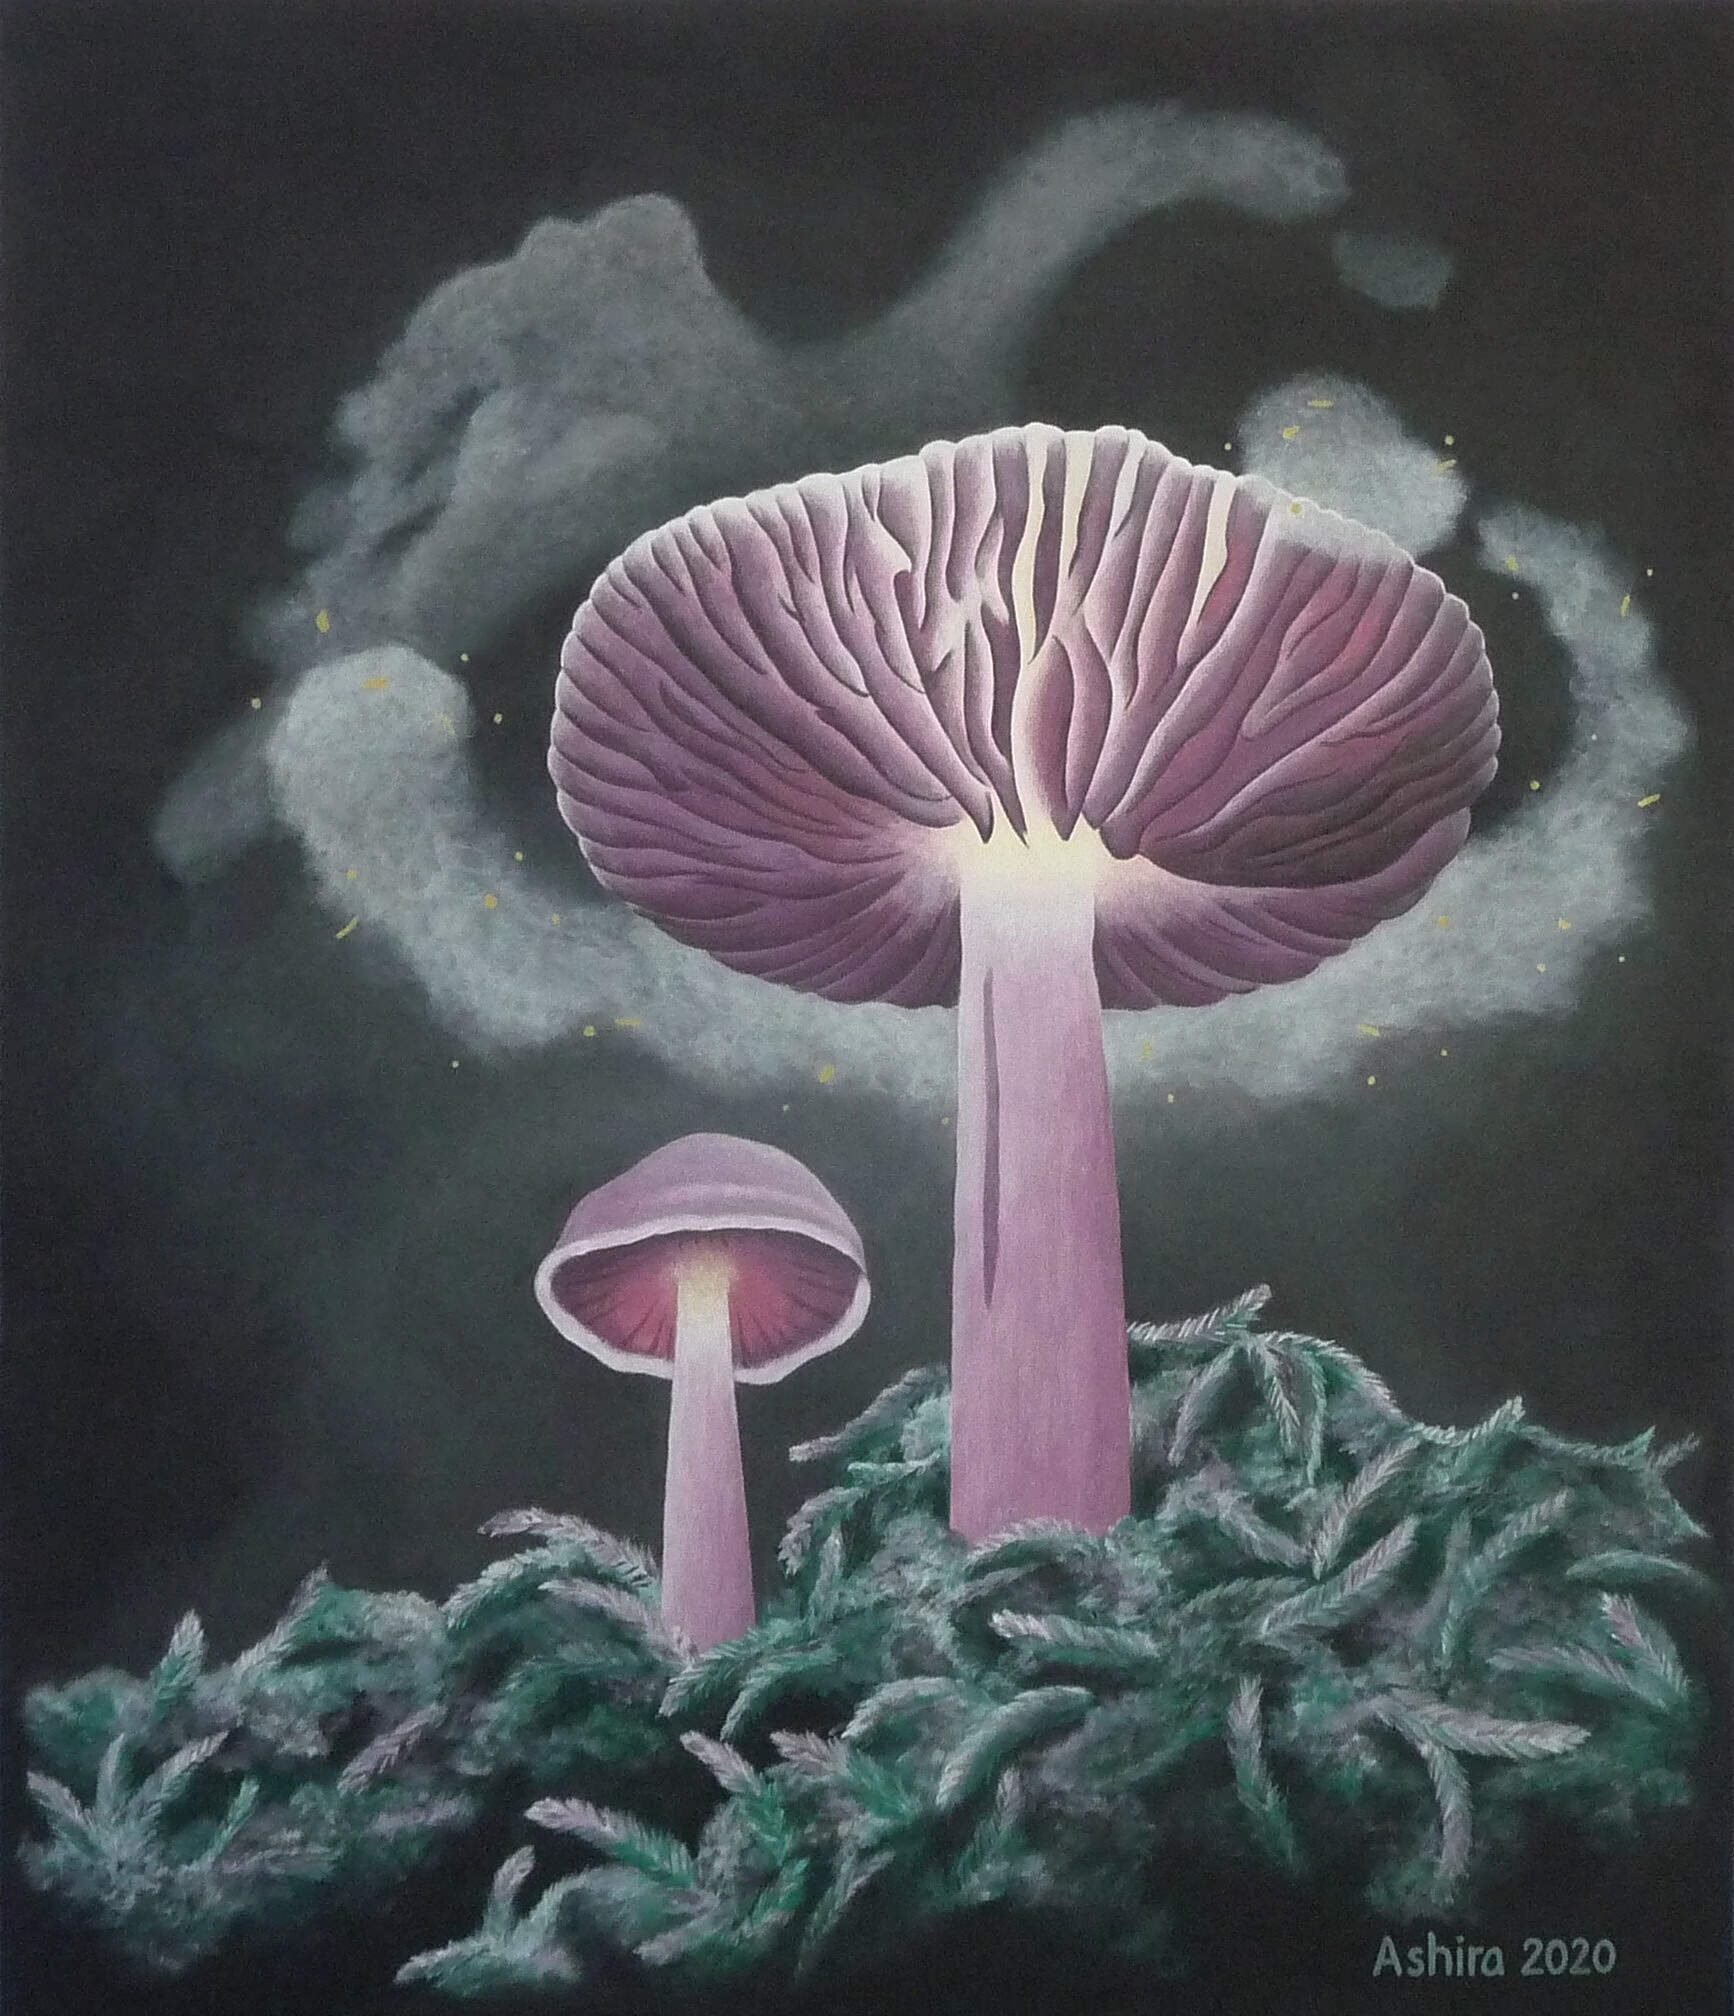 mycena pura / lilac bonnet / gewoon elfenschermpje - july 2020, acrylic on canvas, 60x70 cm